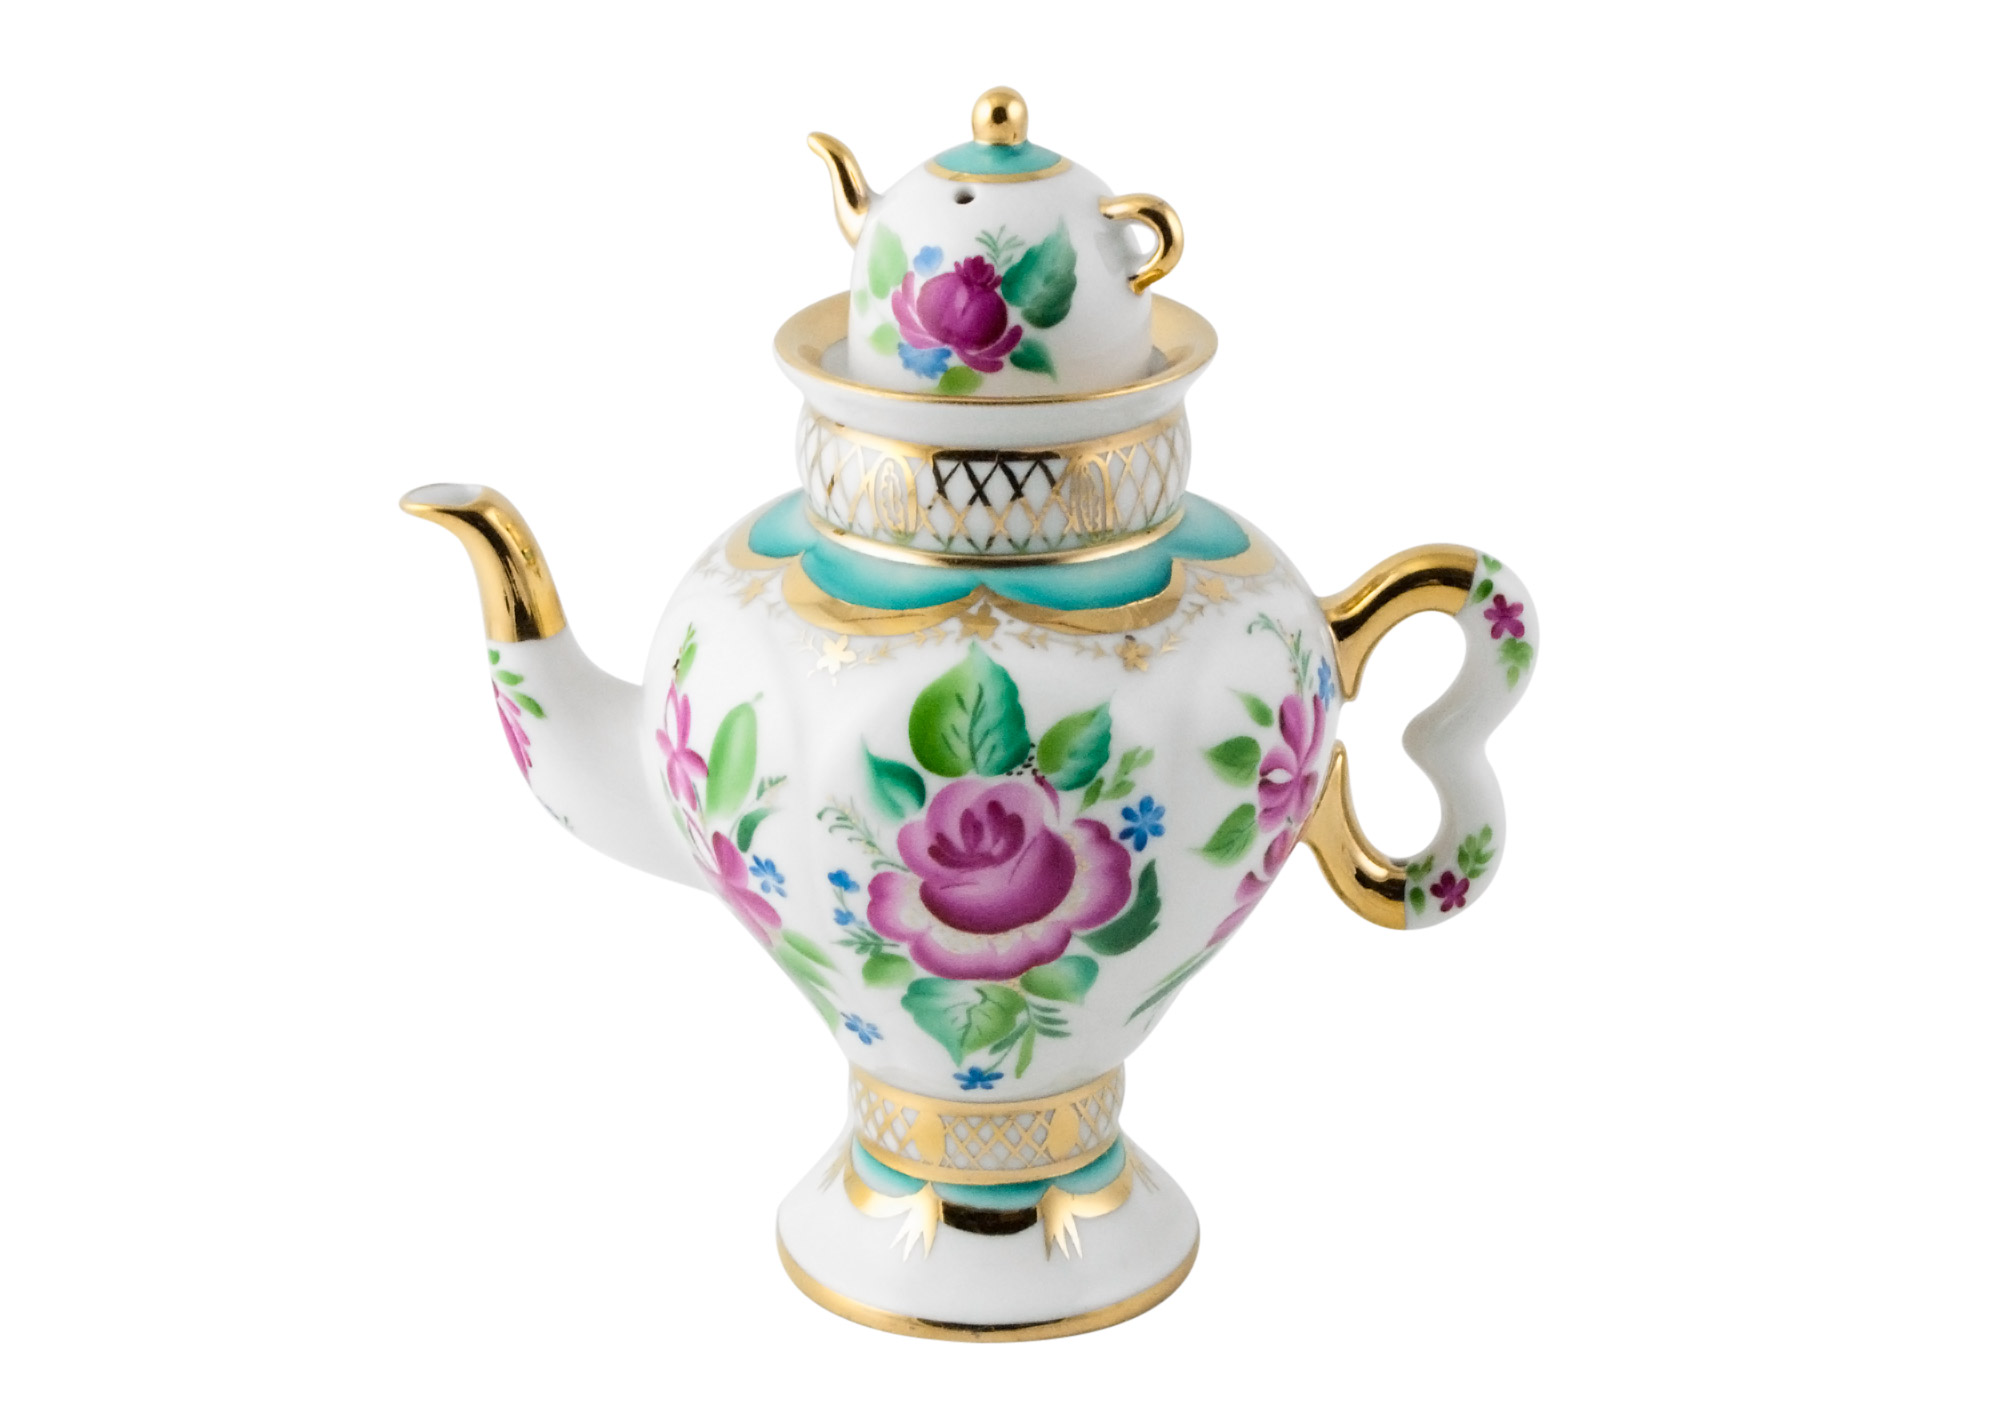 Buy Sunny day Samovar teapot at GoldenCockerel.com